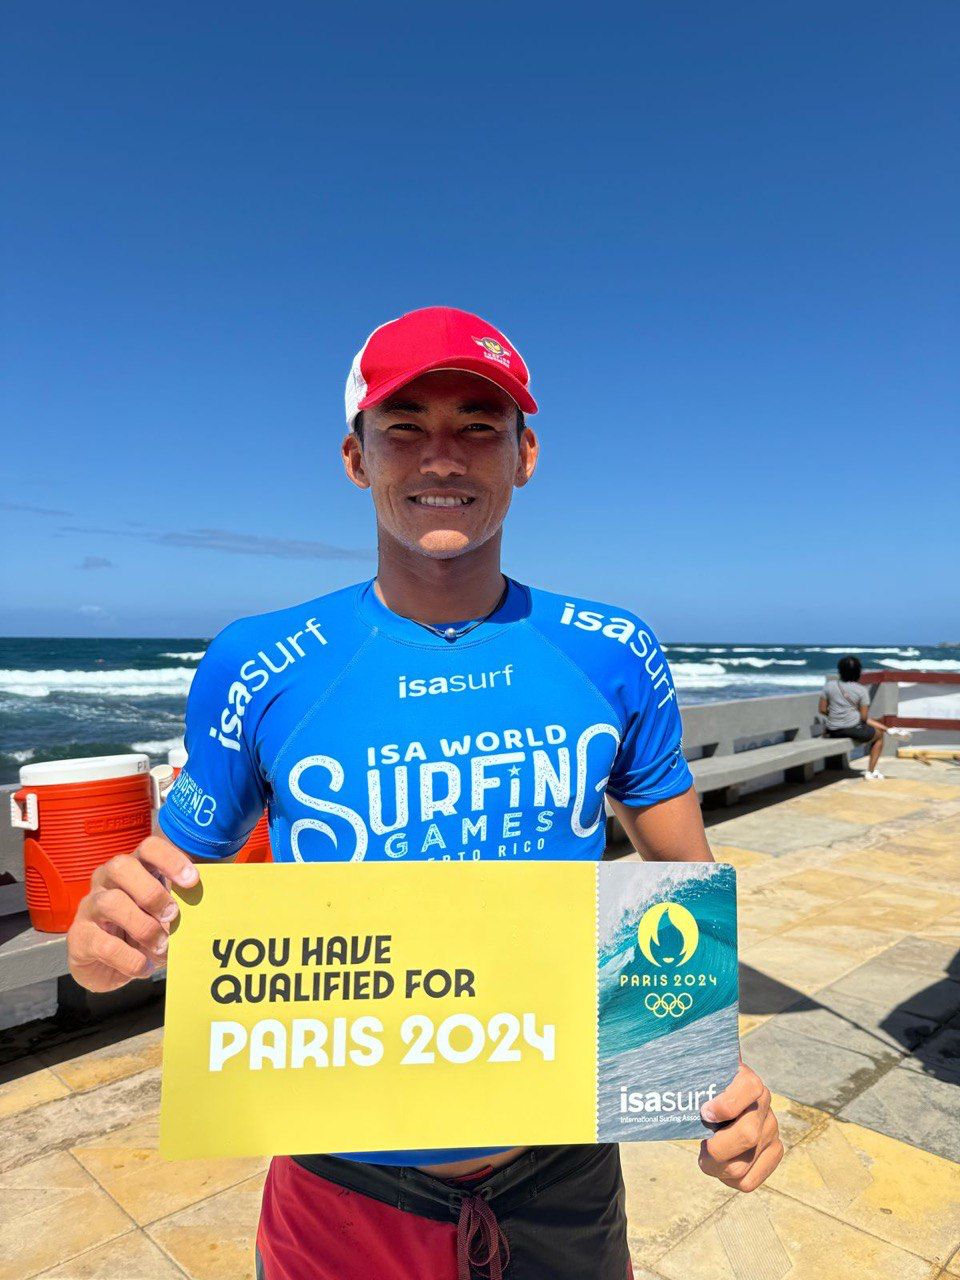 Indonesia Olympic Commitee - Surfer Rio Waida Qualifies for Paris 2024